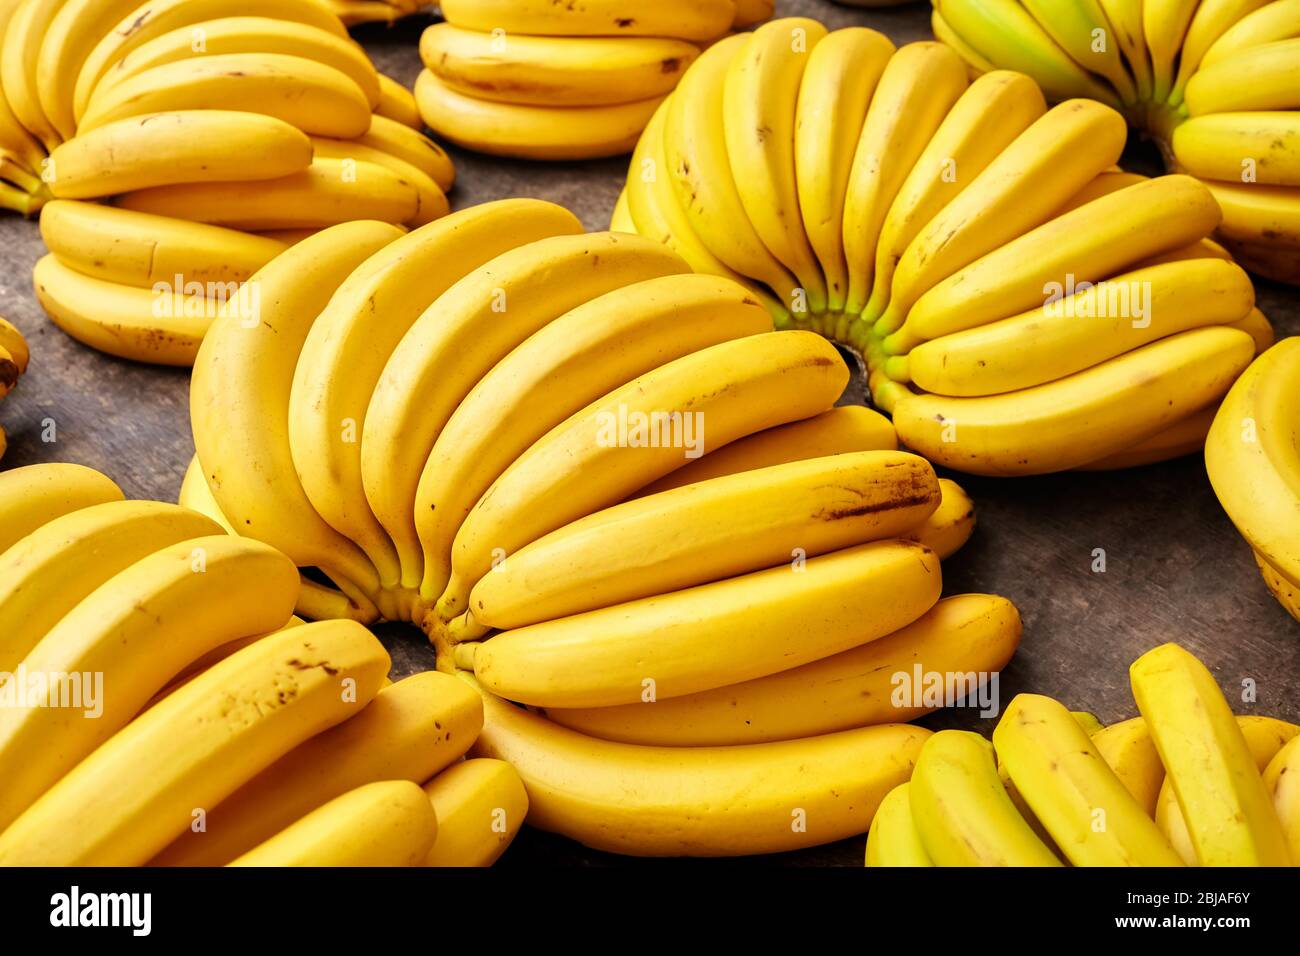 4,142 Banana Bunch Large Royalty-Free Images, Stock Photos